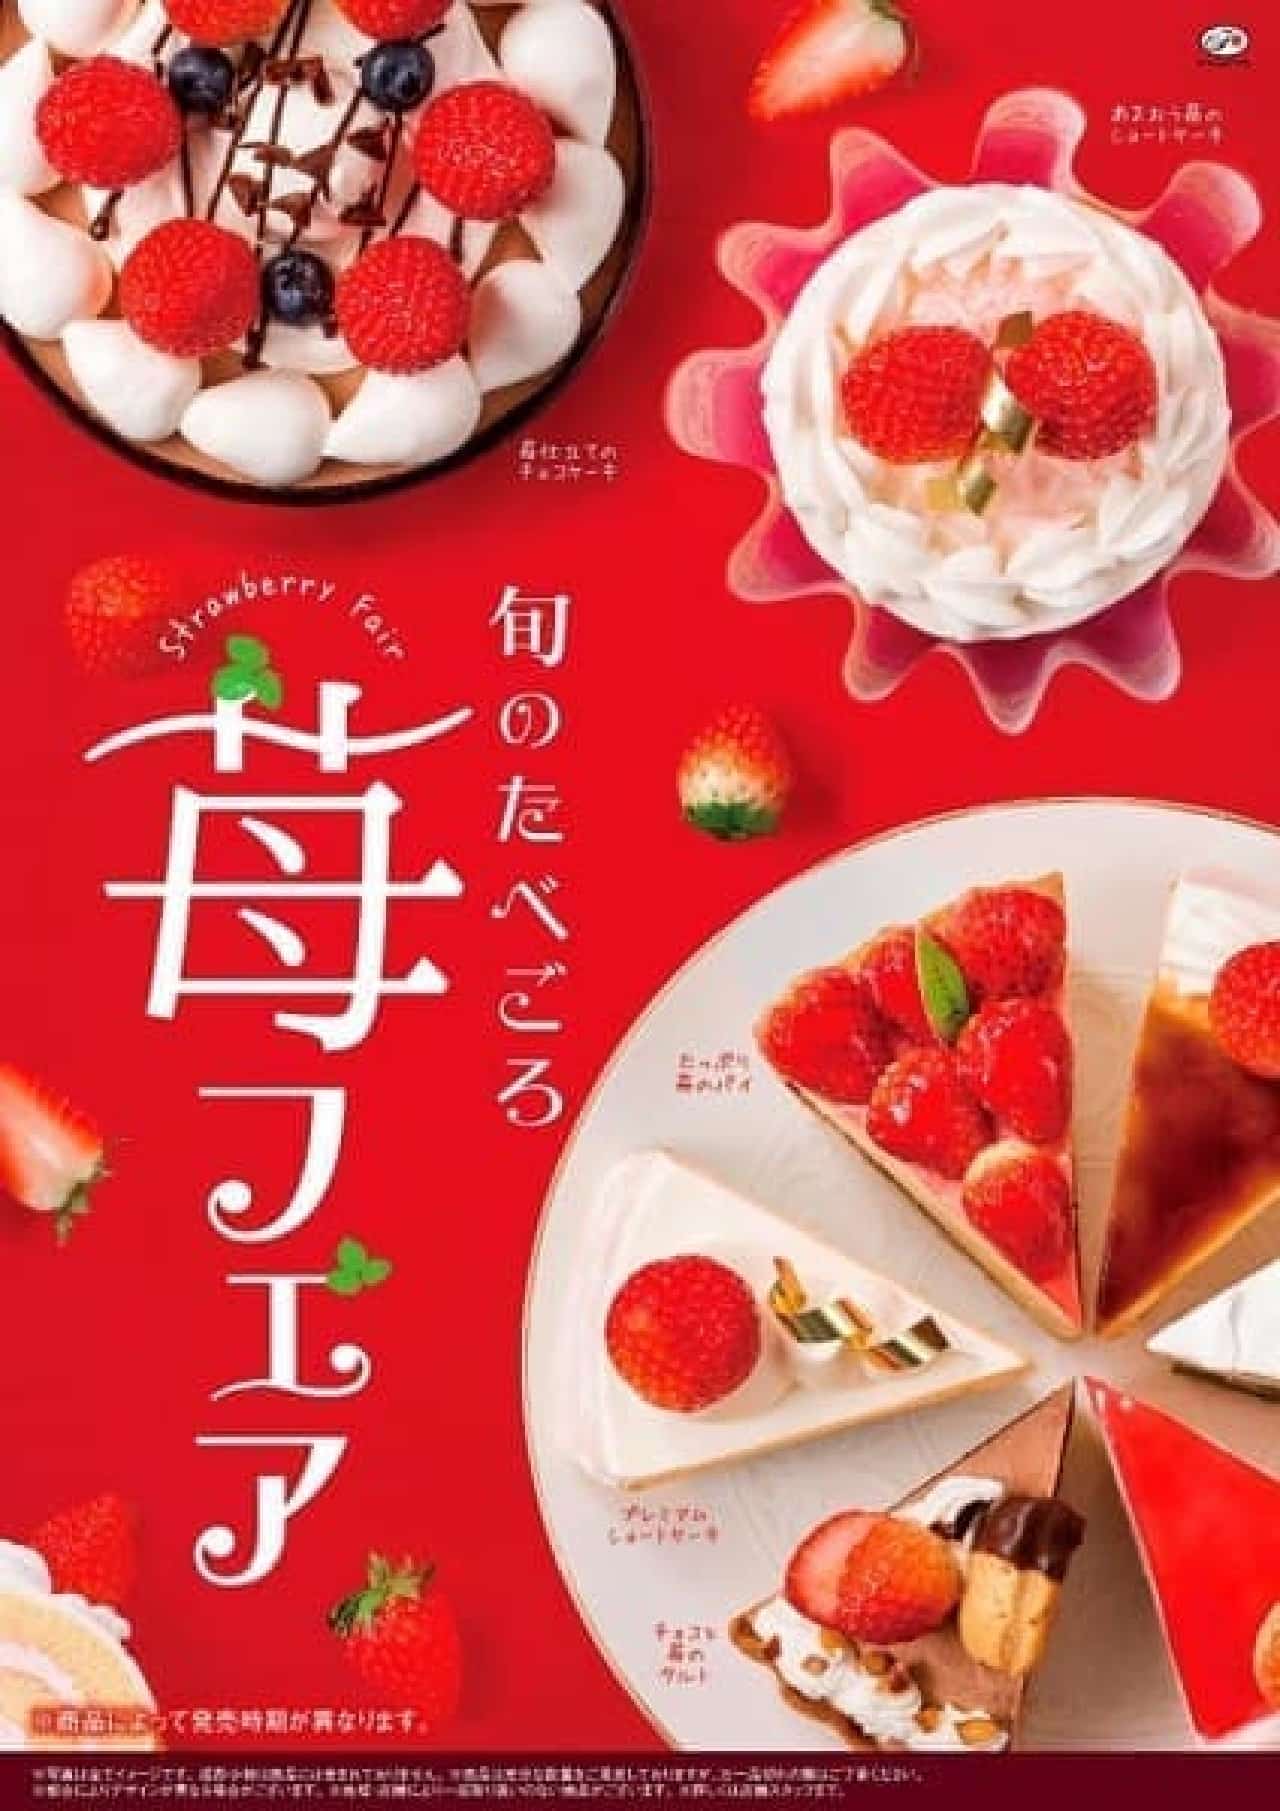 Fujiya pastry shop "Strawberry Fair"